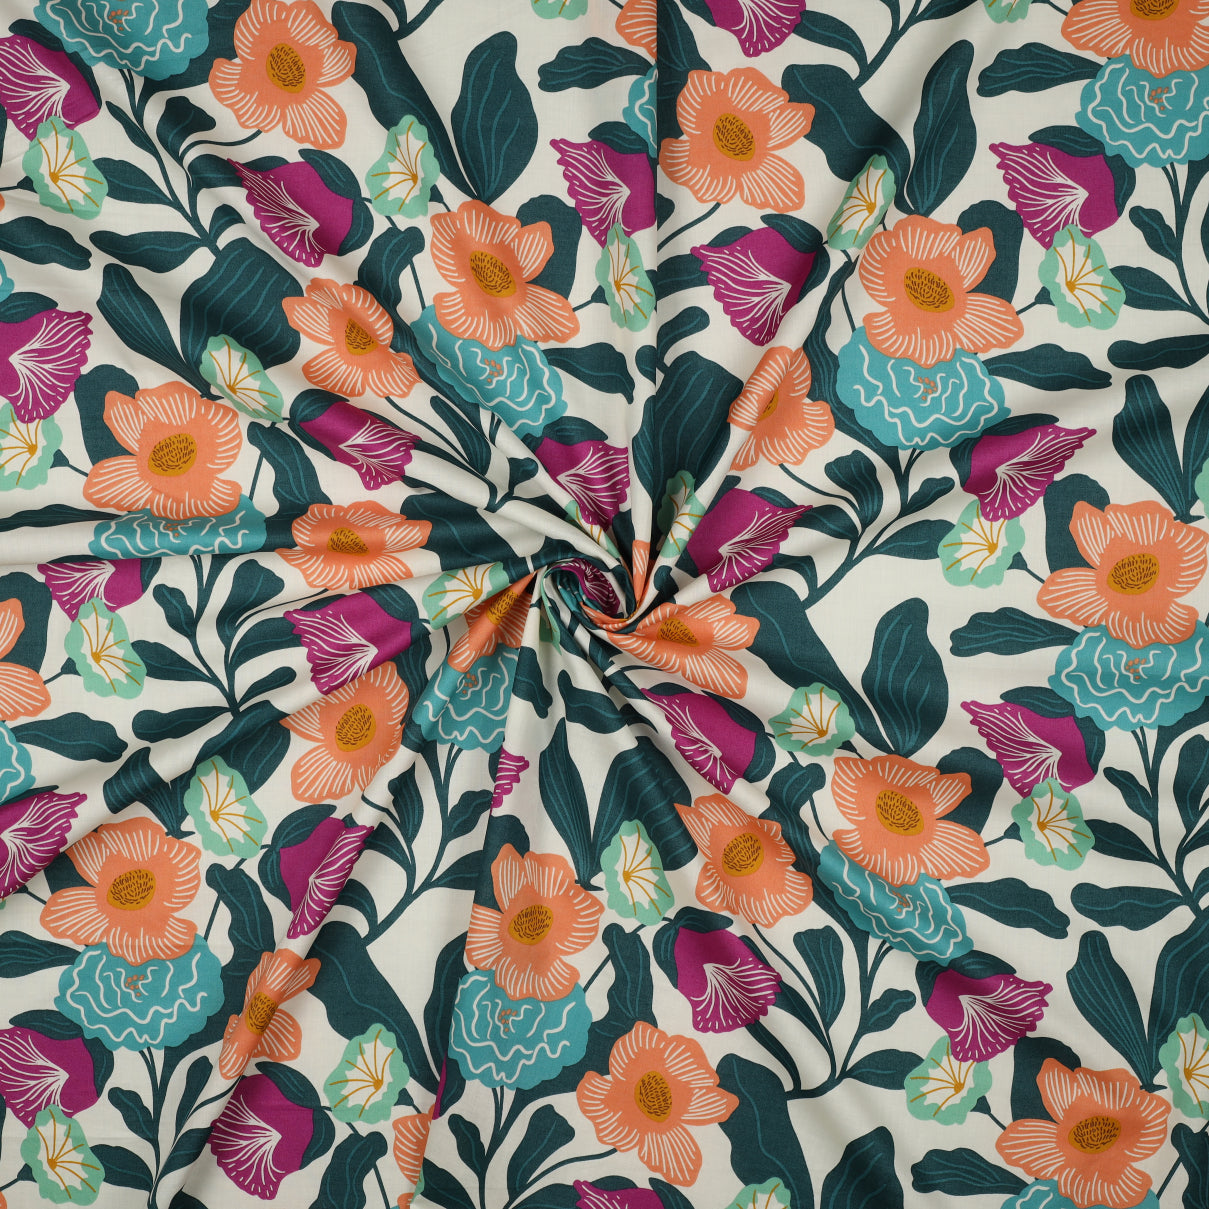 REMNANT 1.62 Metres - Nerida Hansen - London floral Ecru Cotton Voile Fabric